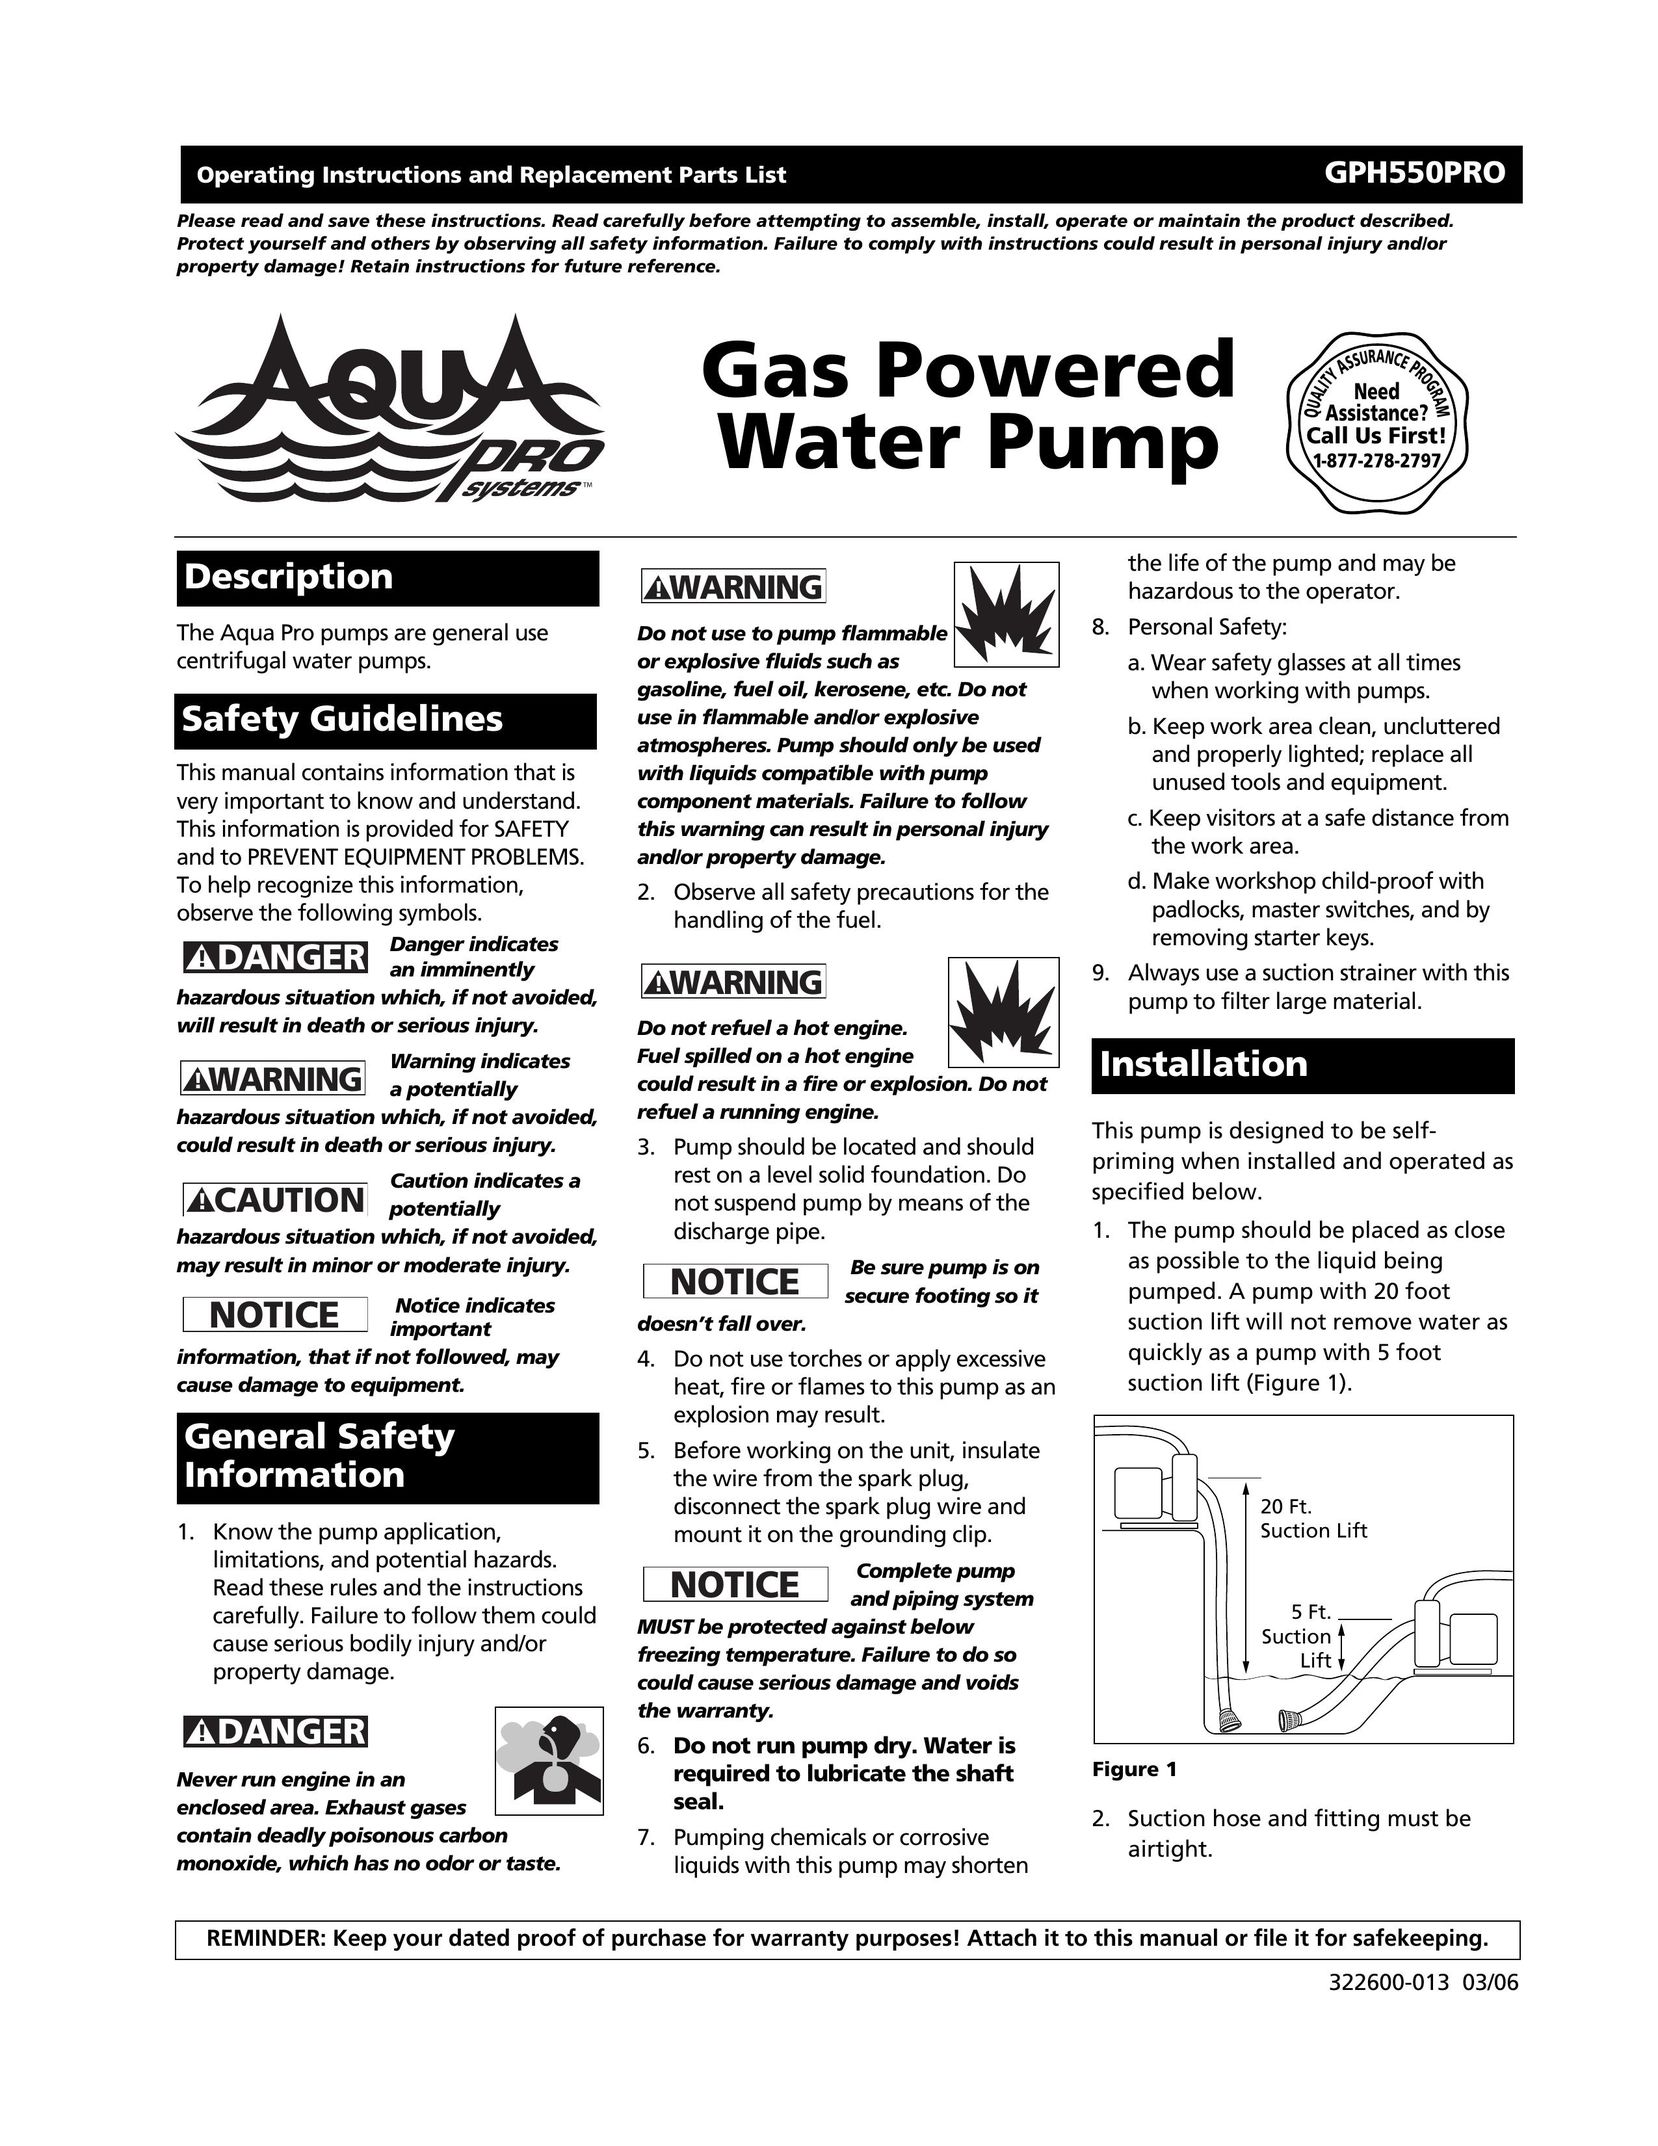 AquaPRO GPH550PRO Water Pump User Manual